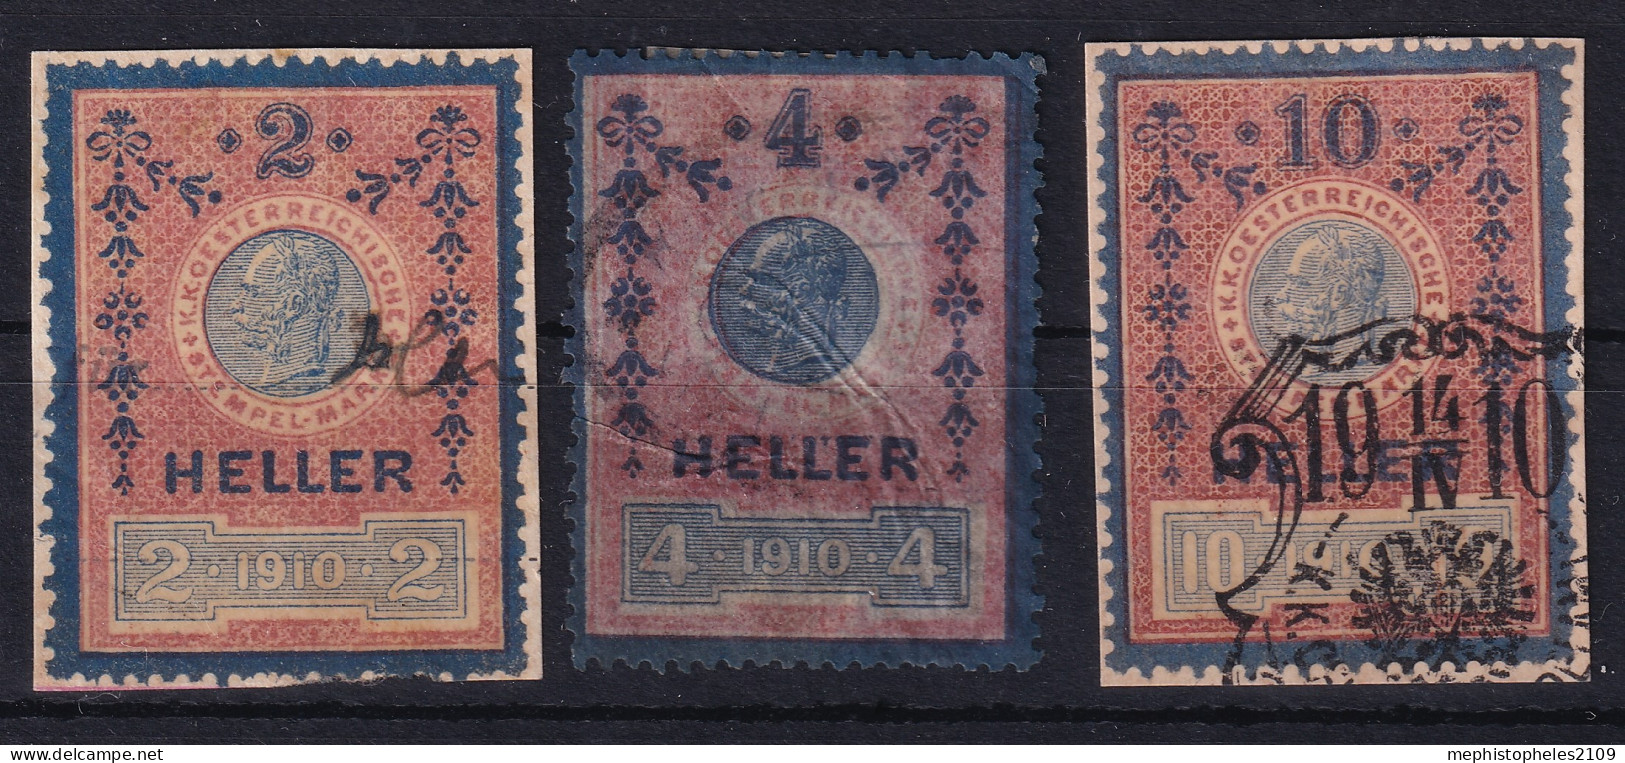 AUSTRIA 1910 - Canceled - Stempelmarken 2h, 4h, 10h - Revenue Stamps